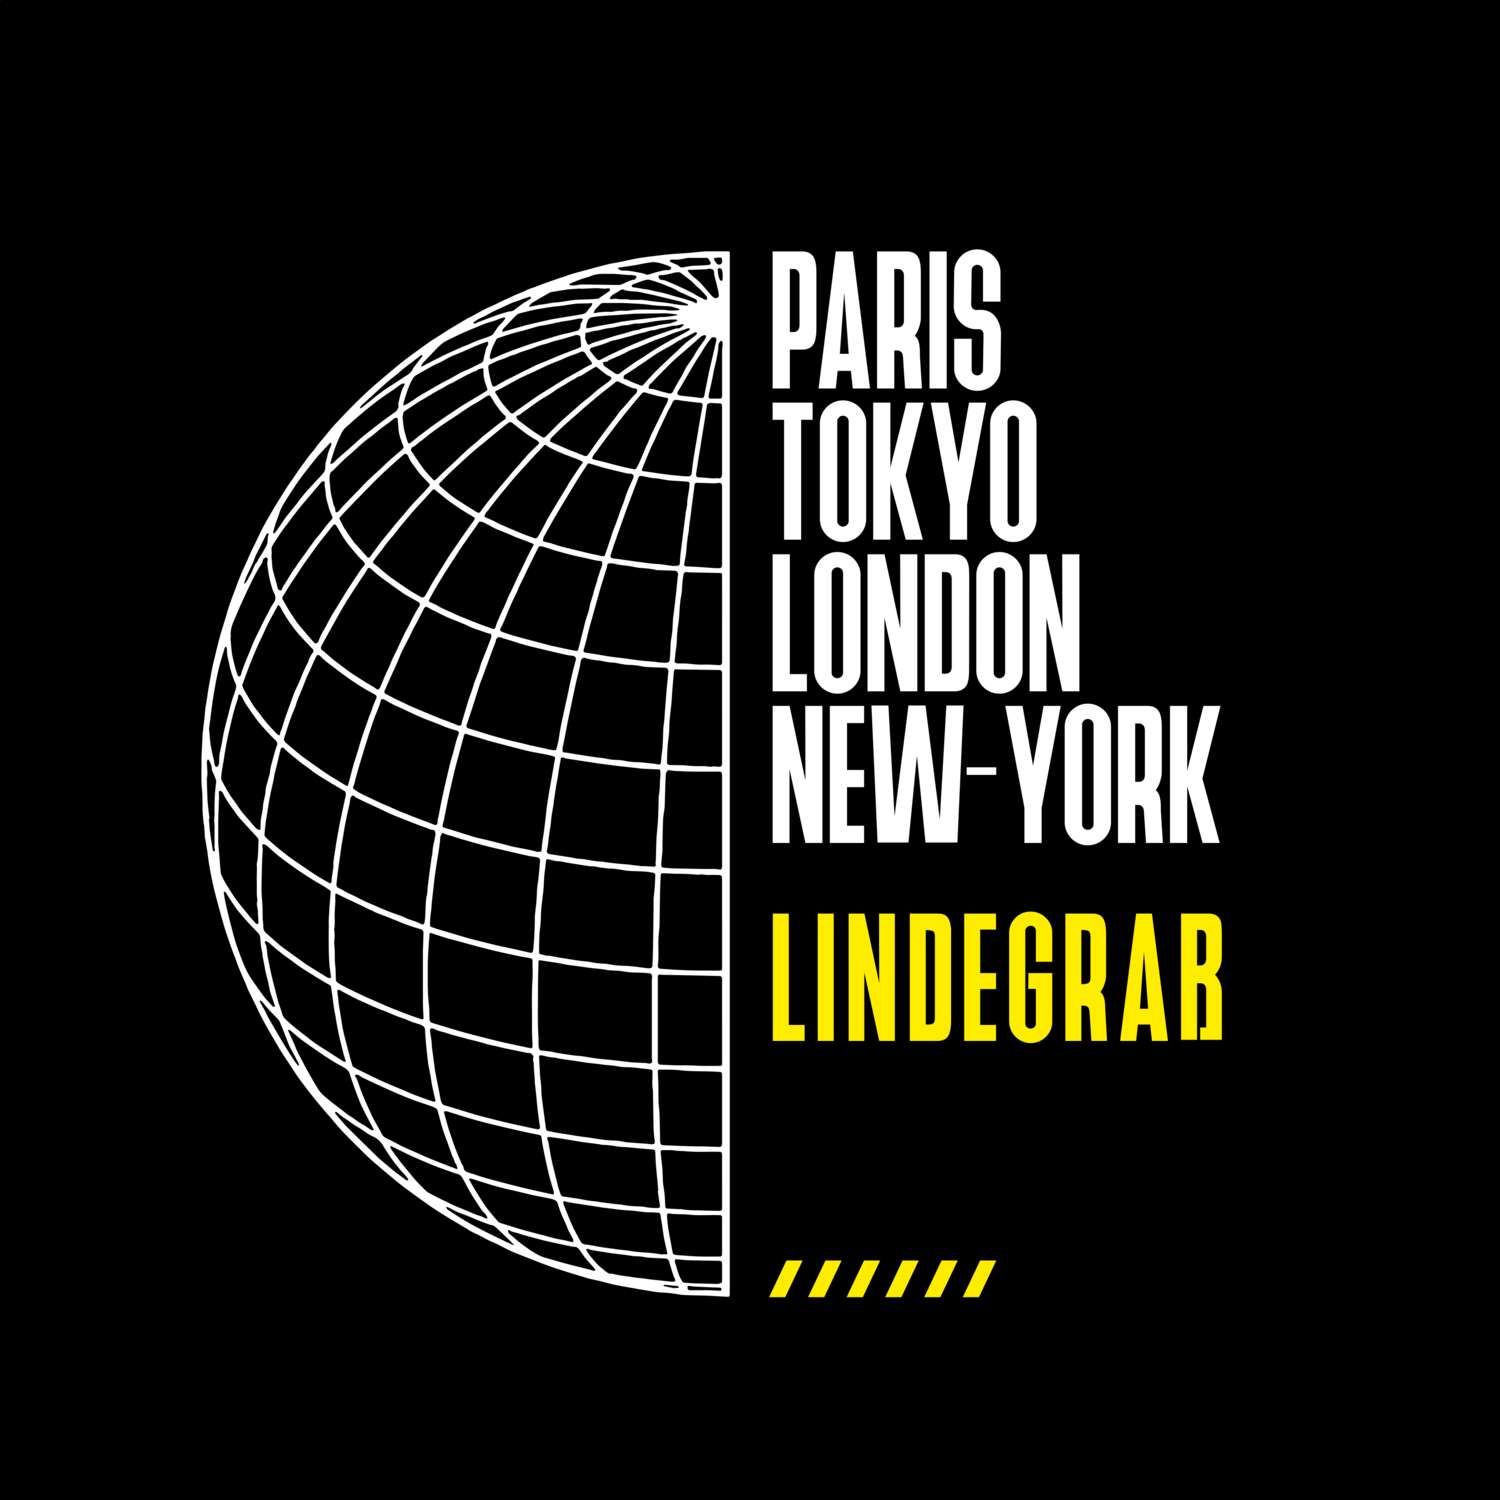 Lindegraß T-Shirt »Paris Tokyo London«